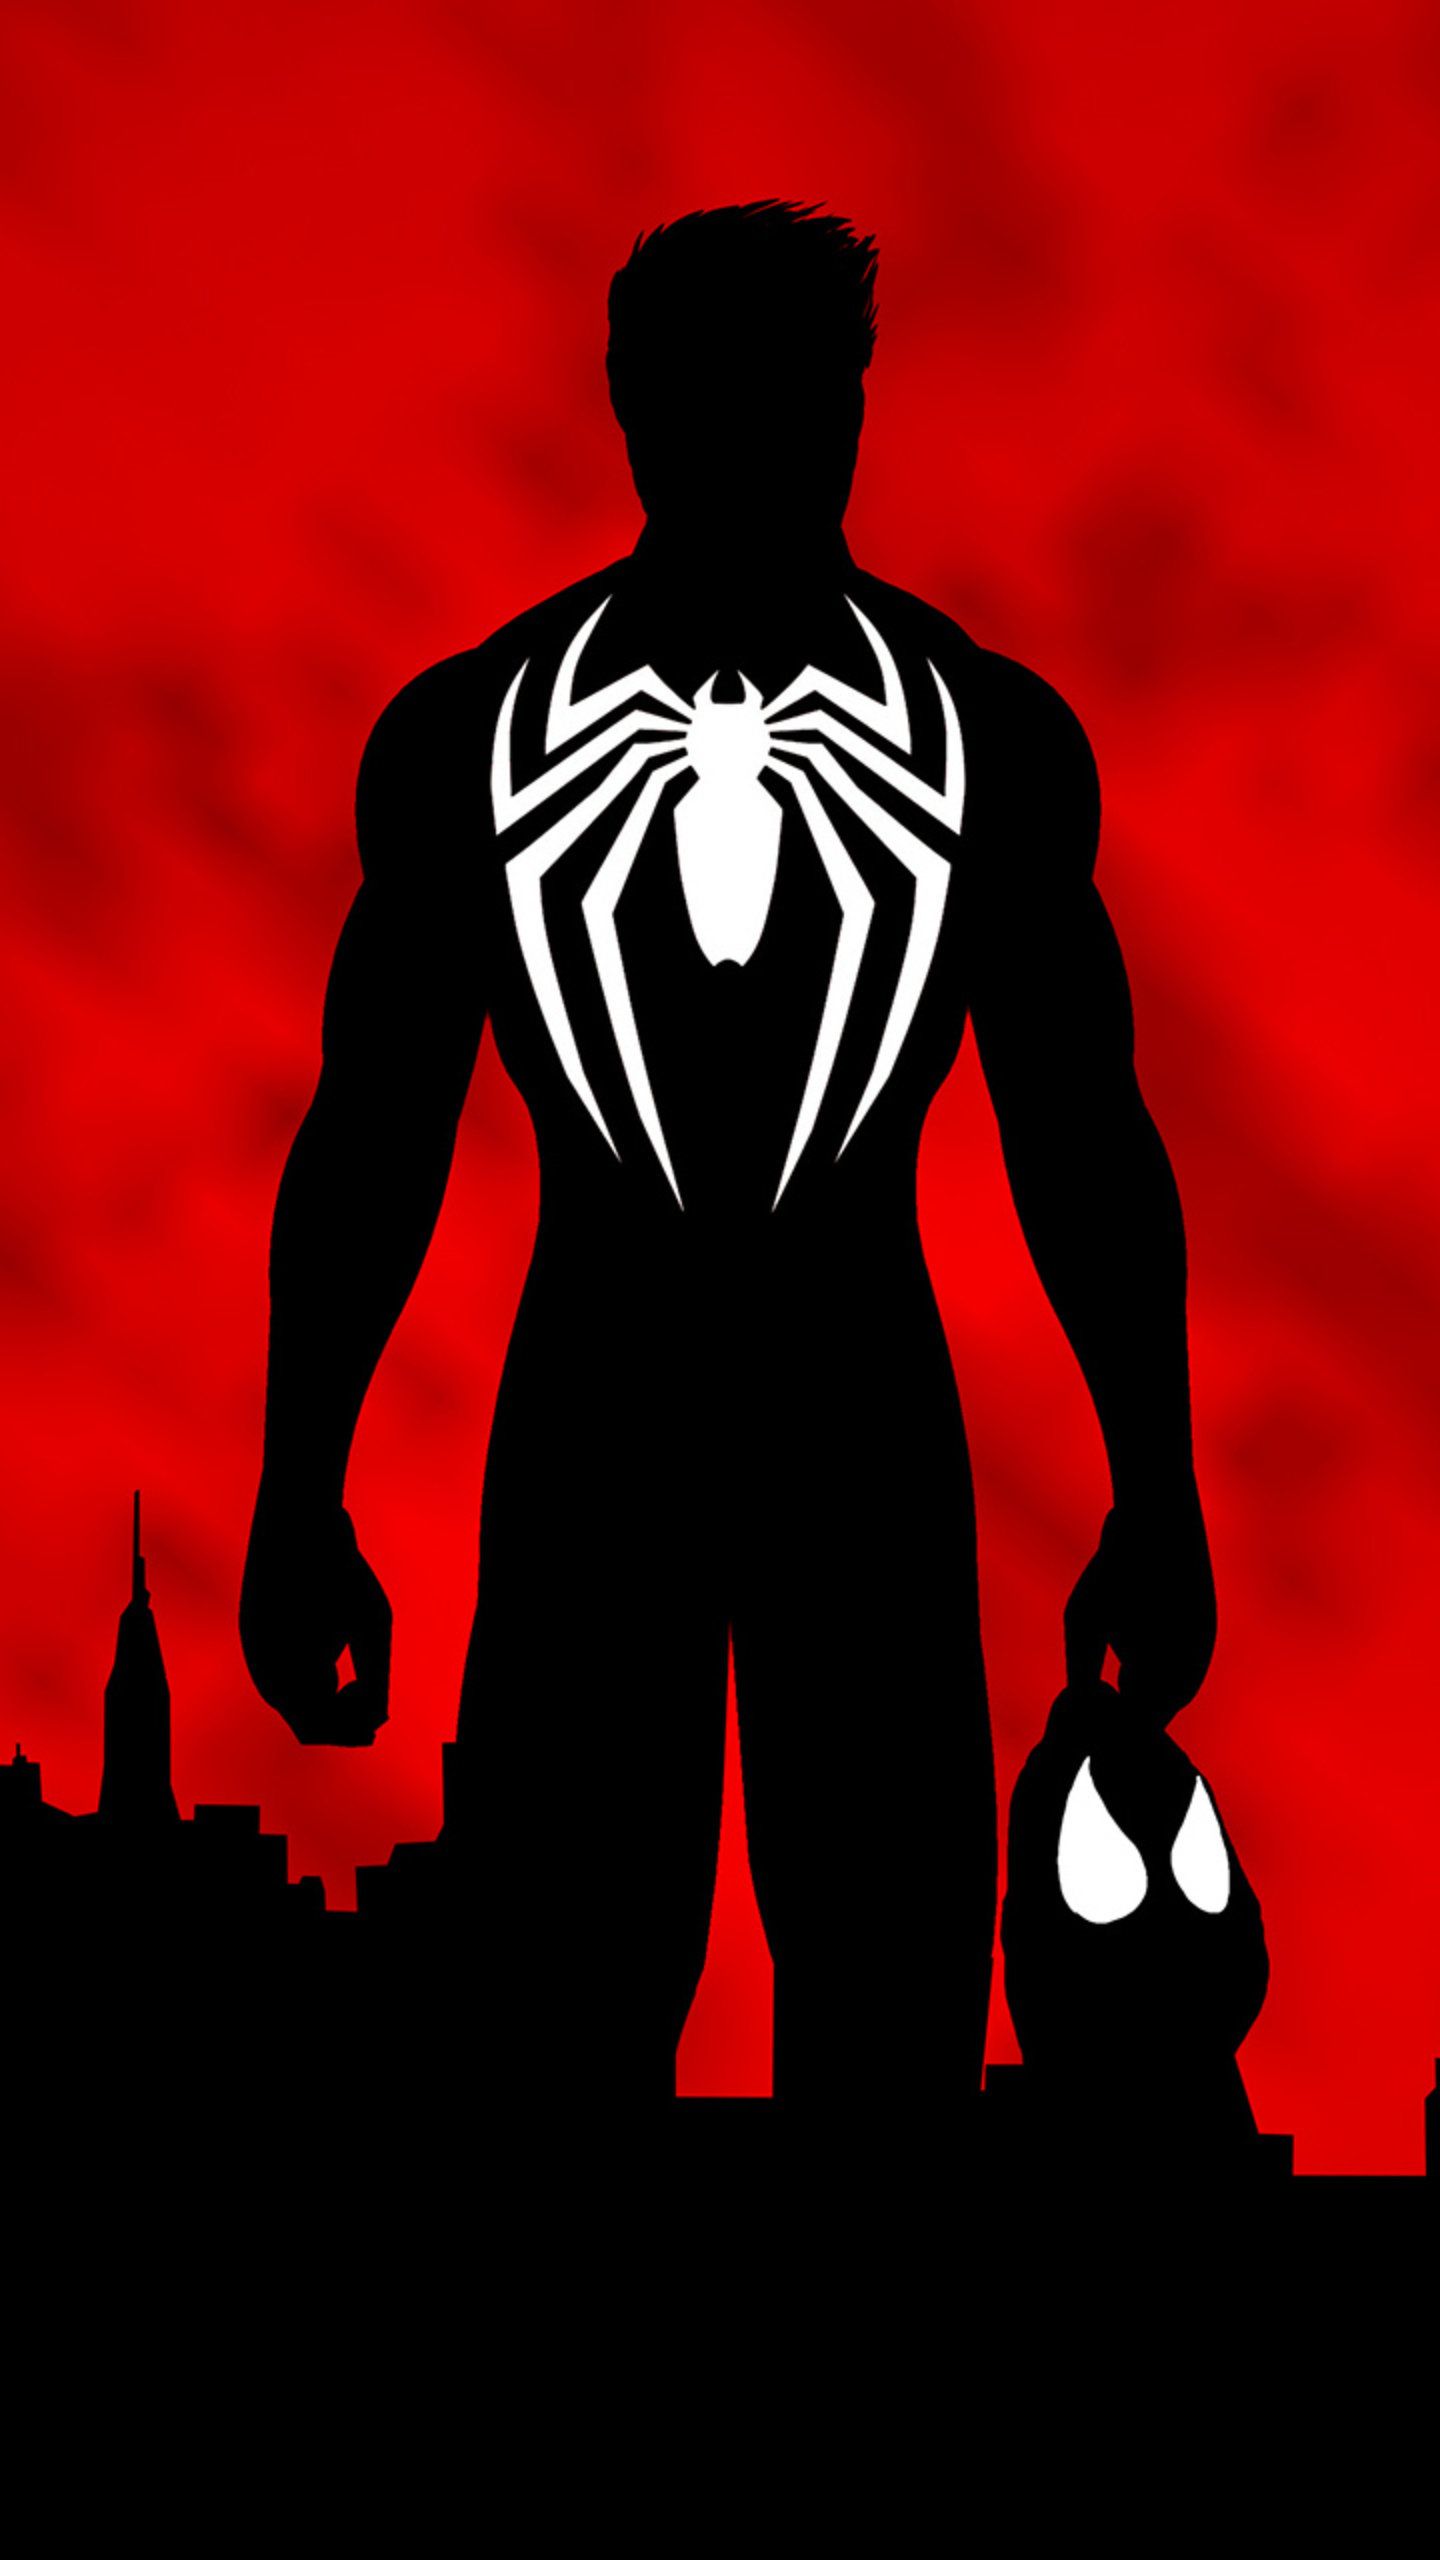 Spiderman Mask Off, HD Superheroes Wallpaper Photo and Picture ID. Superhero, Superhero wallpaper, Silhouette art